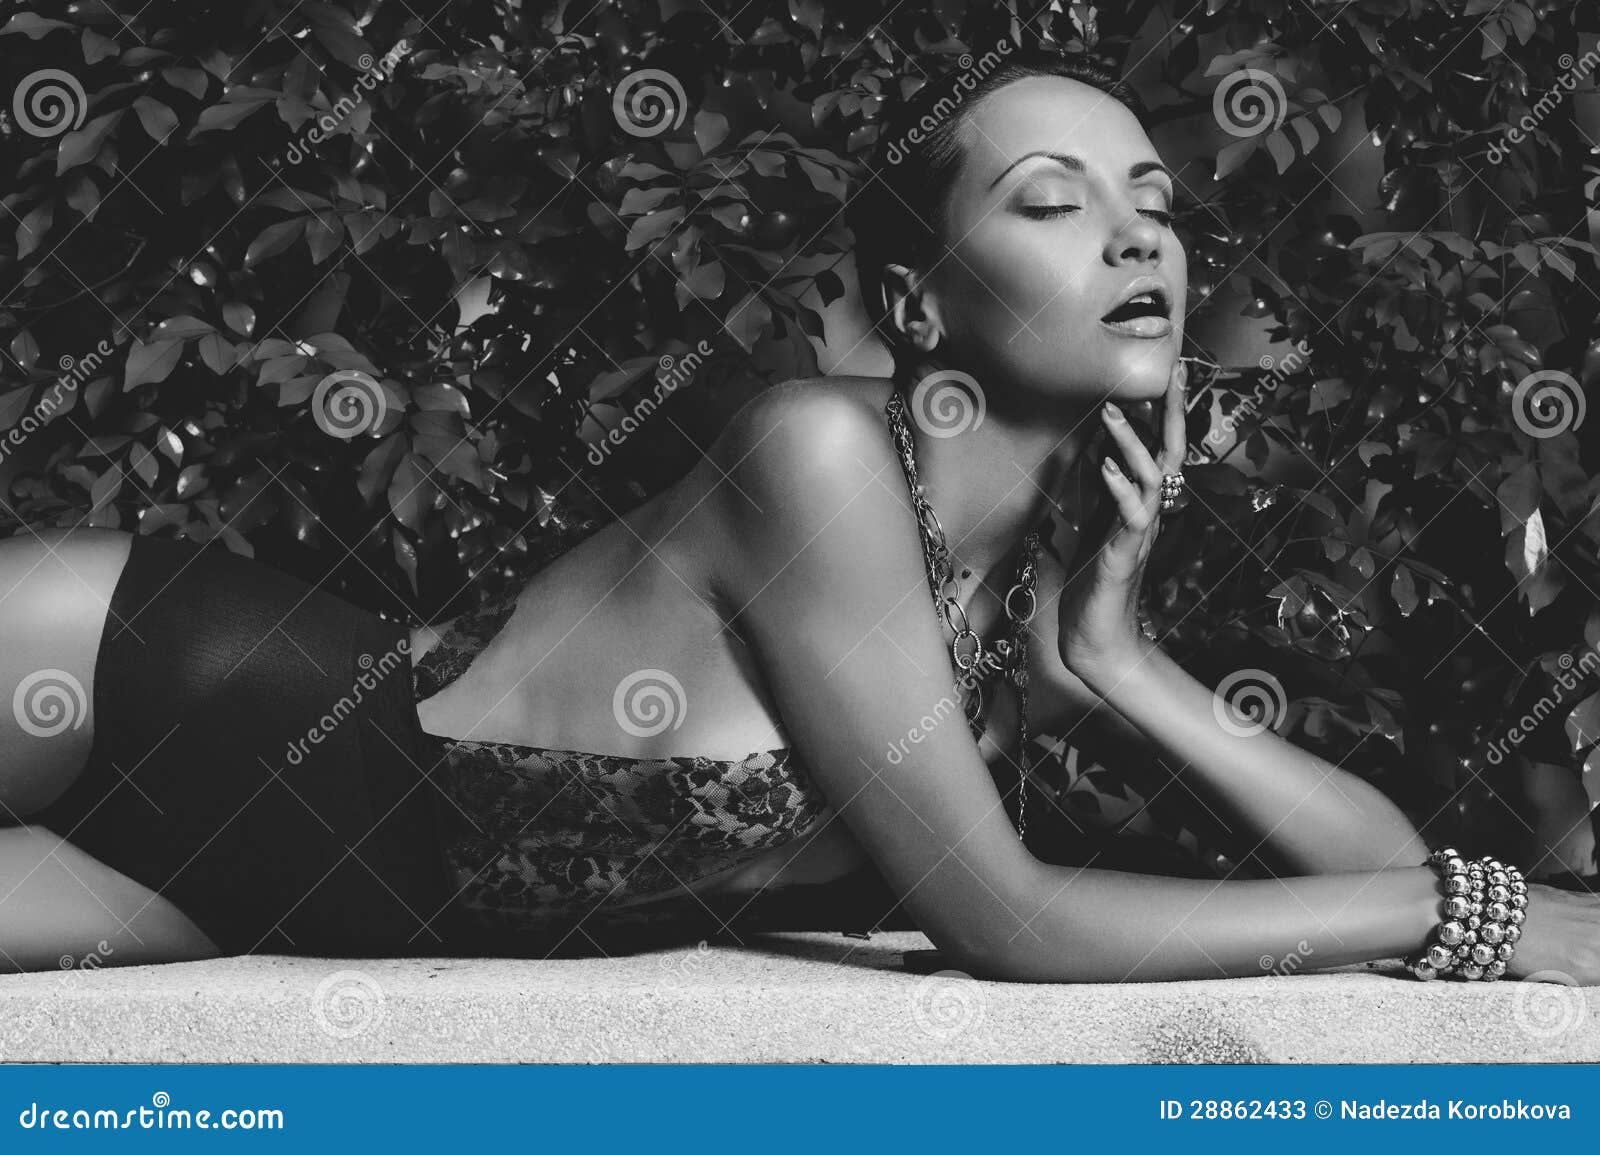 Glamorous Lady in Lace Leotard Stock Image - Image of exotic, lady